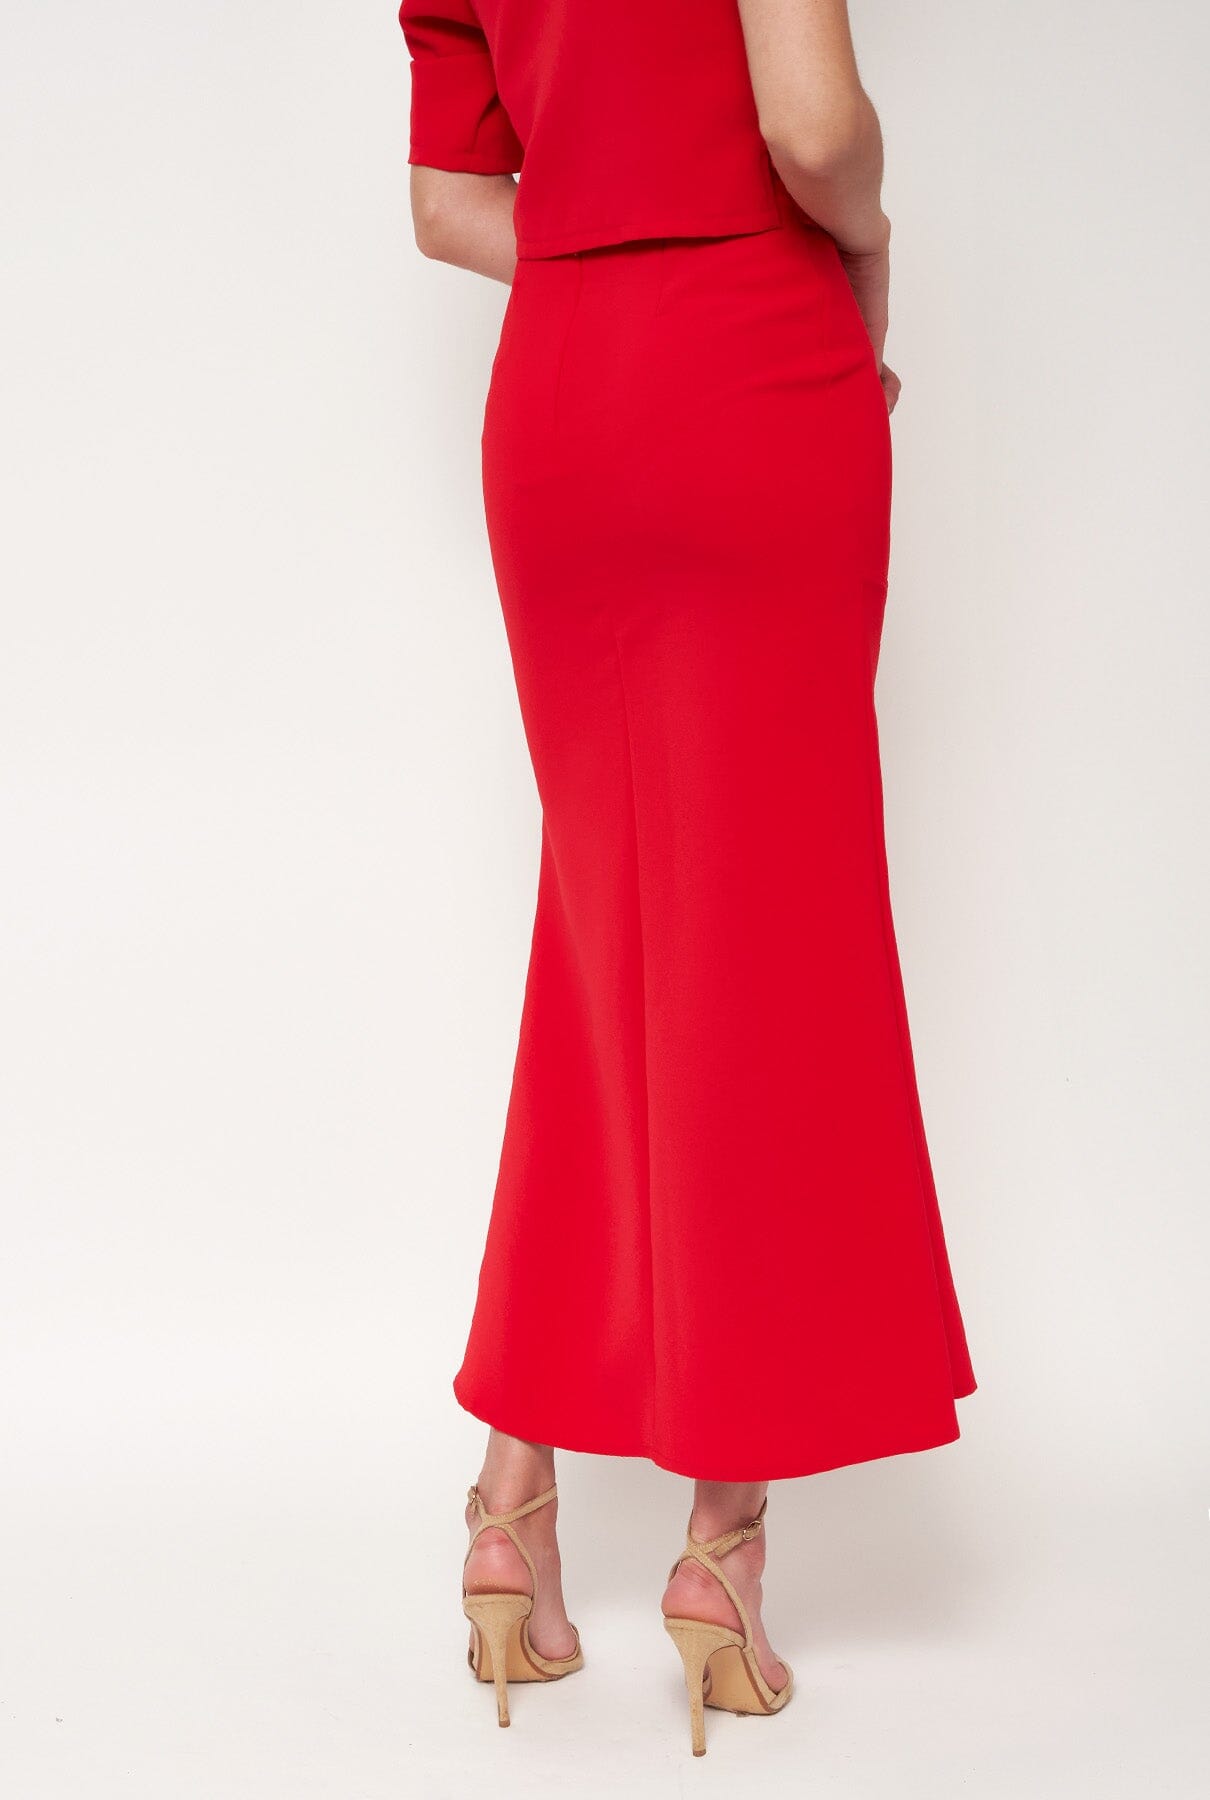 Falda Femés Rojo Skirts Alava Brand 